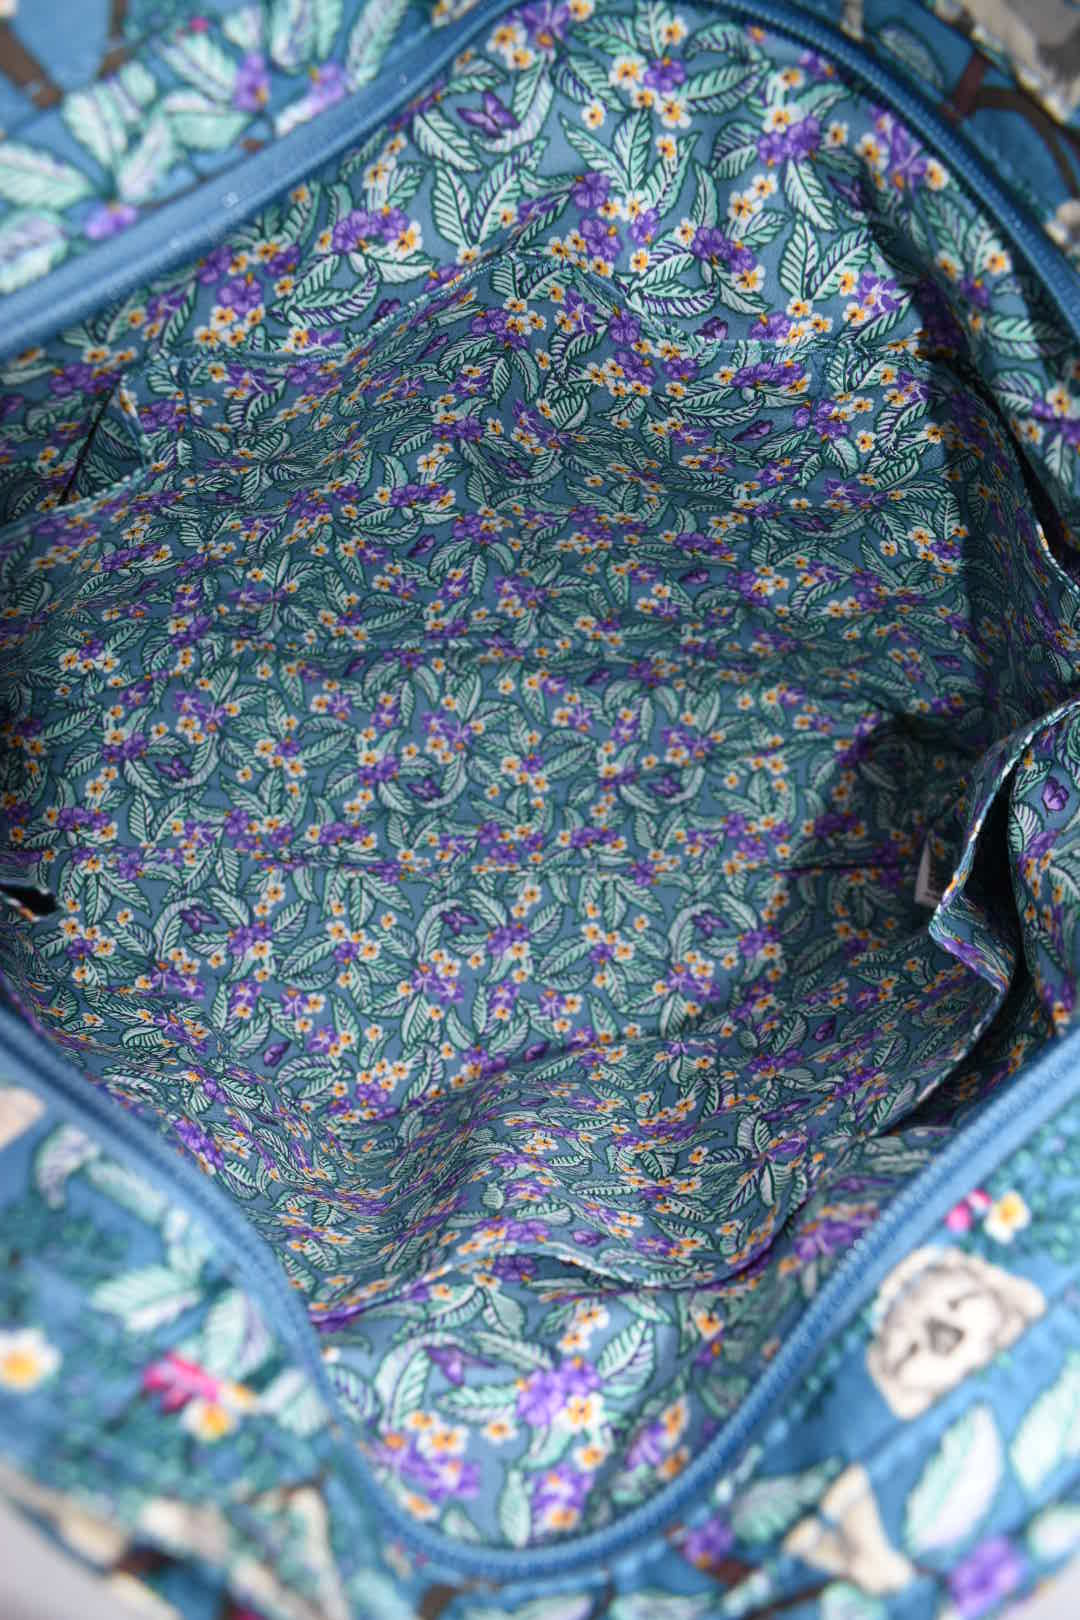 Vera Bradley Small Vera Tote Bag in "Hanging Around" Pattern